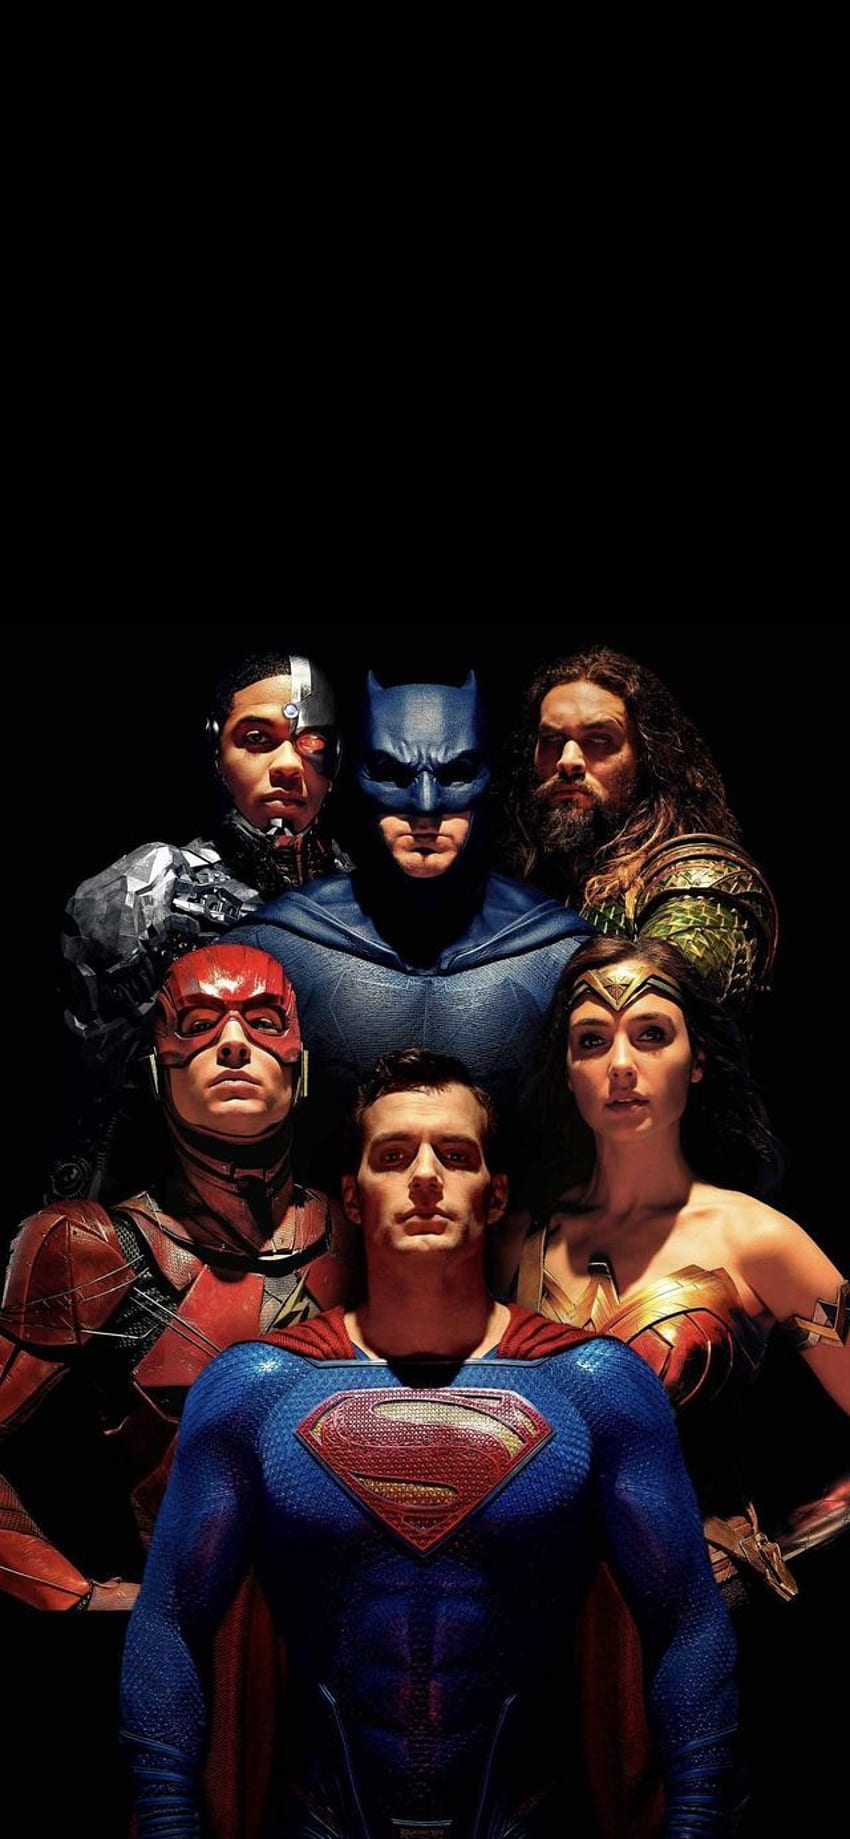 Idee DC Extended Universe nel 2021. supereroi, dc comics, batman vs superman, film DC Comics Sfondo del telefono HD